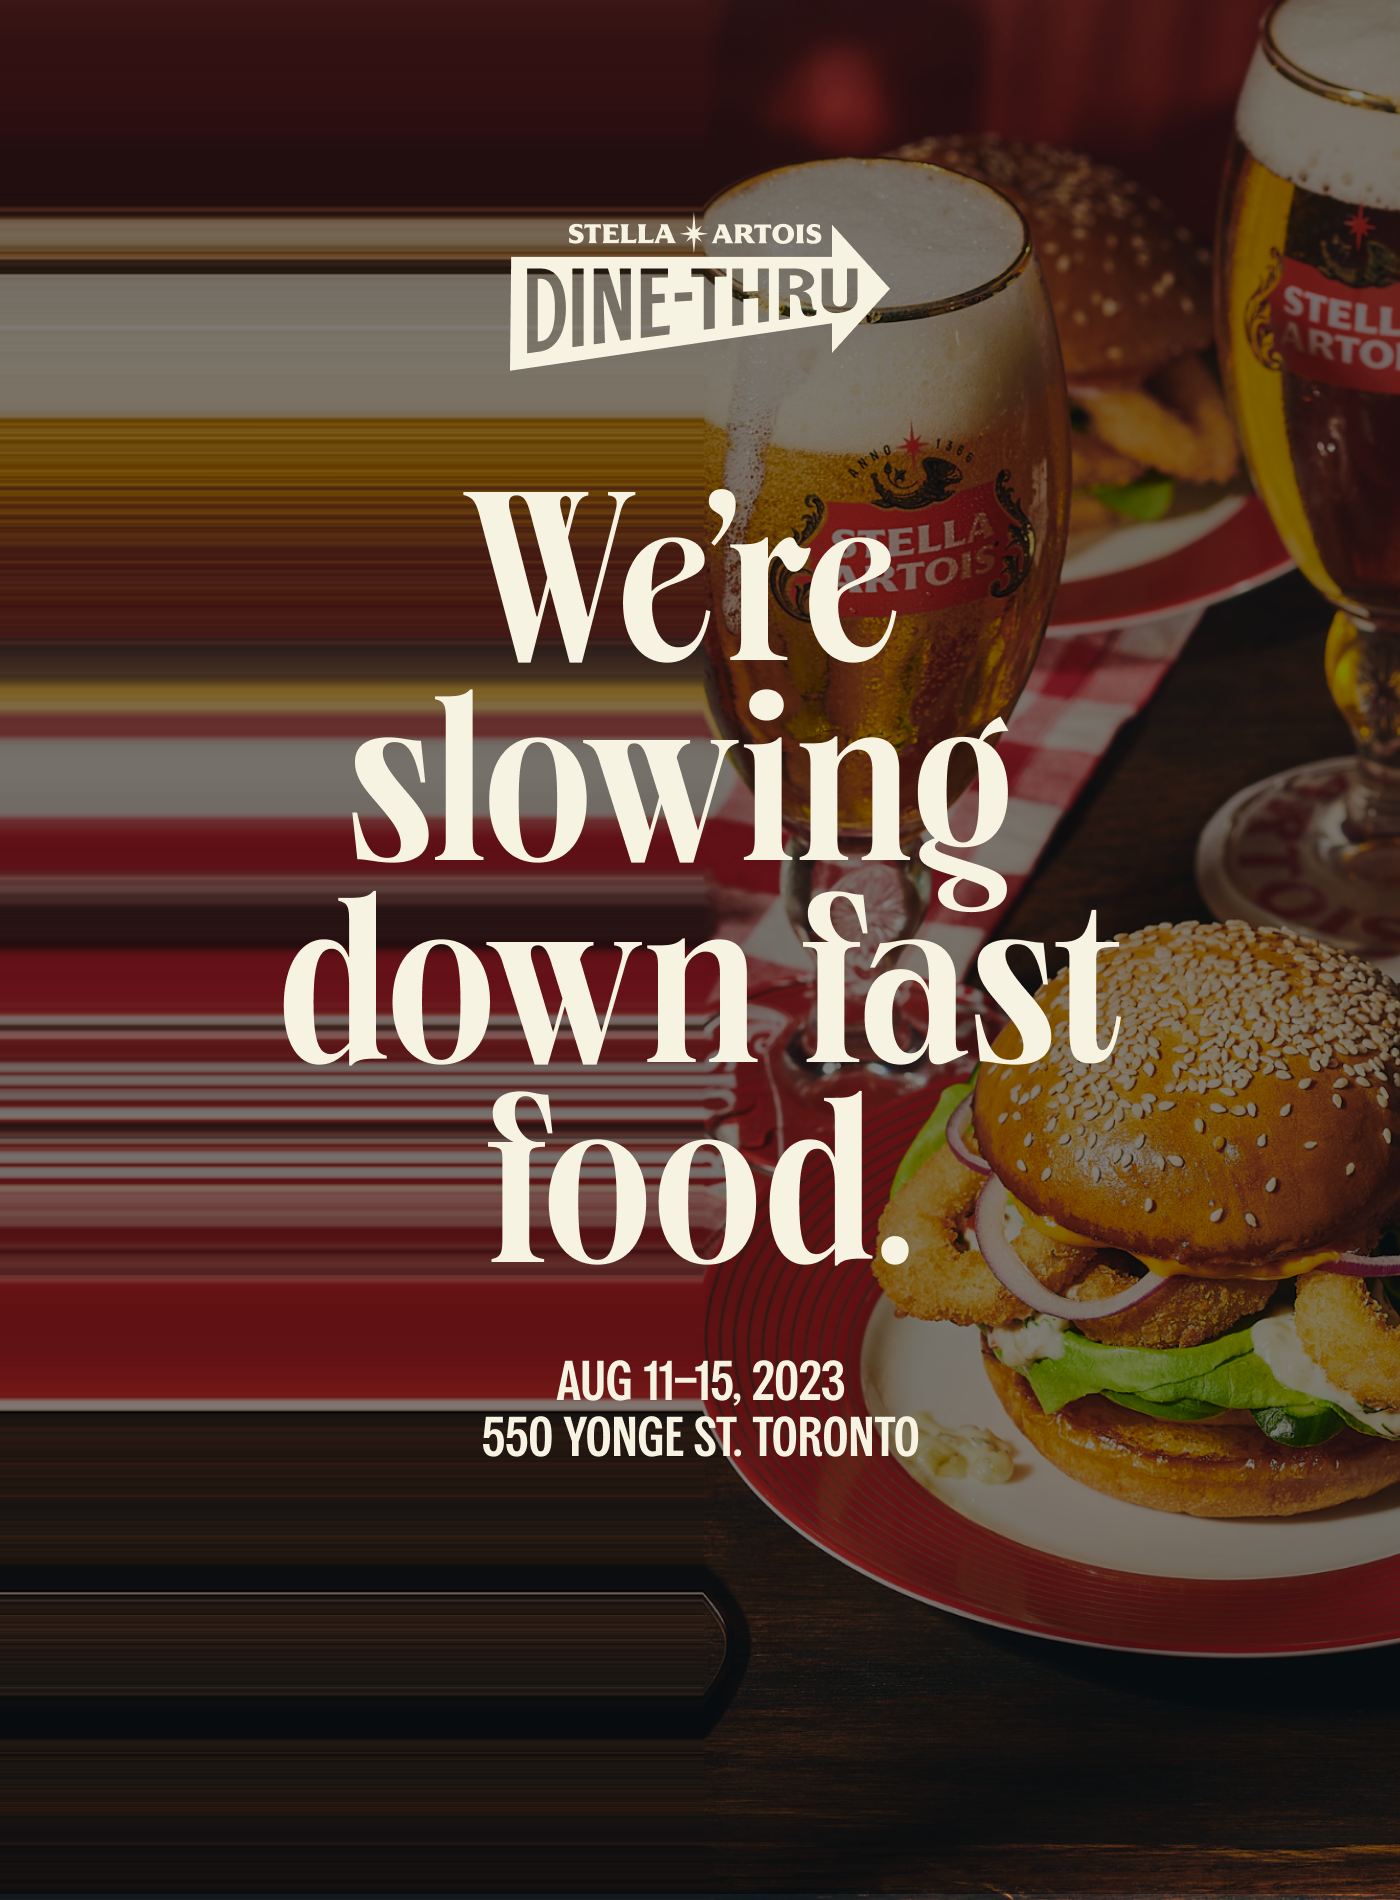 Stella Artois: Dine-Thru. We're slowing down fast food. Aug 11-15, 2023. 550 Yonge St. Toronto.